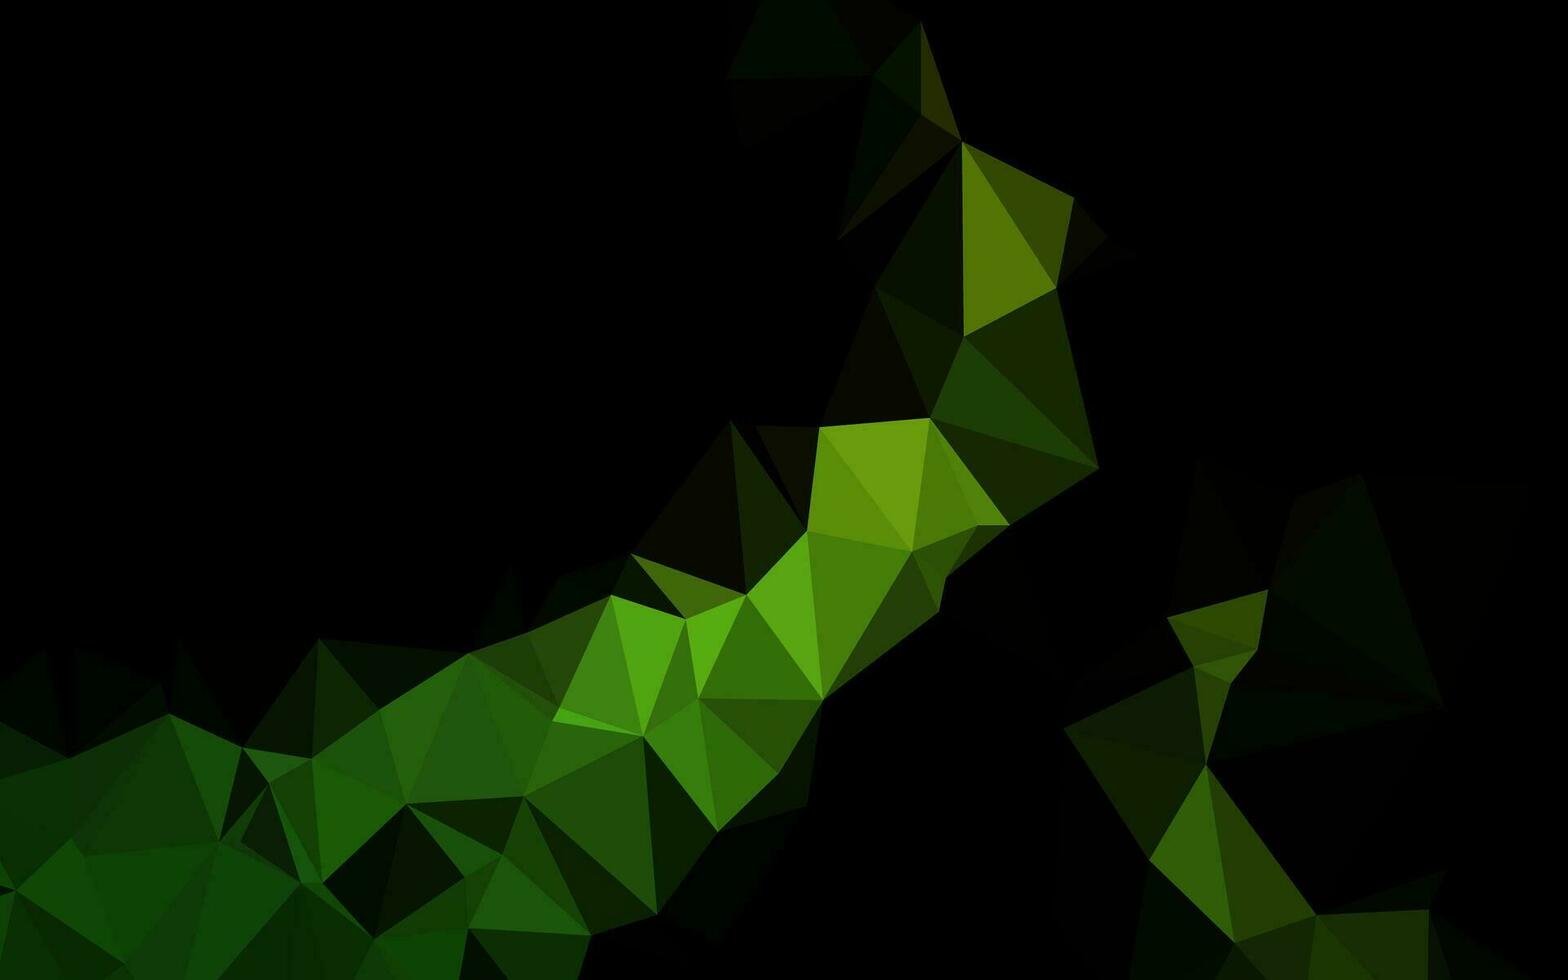 hellgrüner Vektor glänzender dreieckiger Hintergrund.